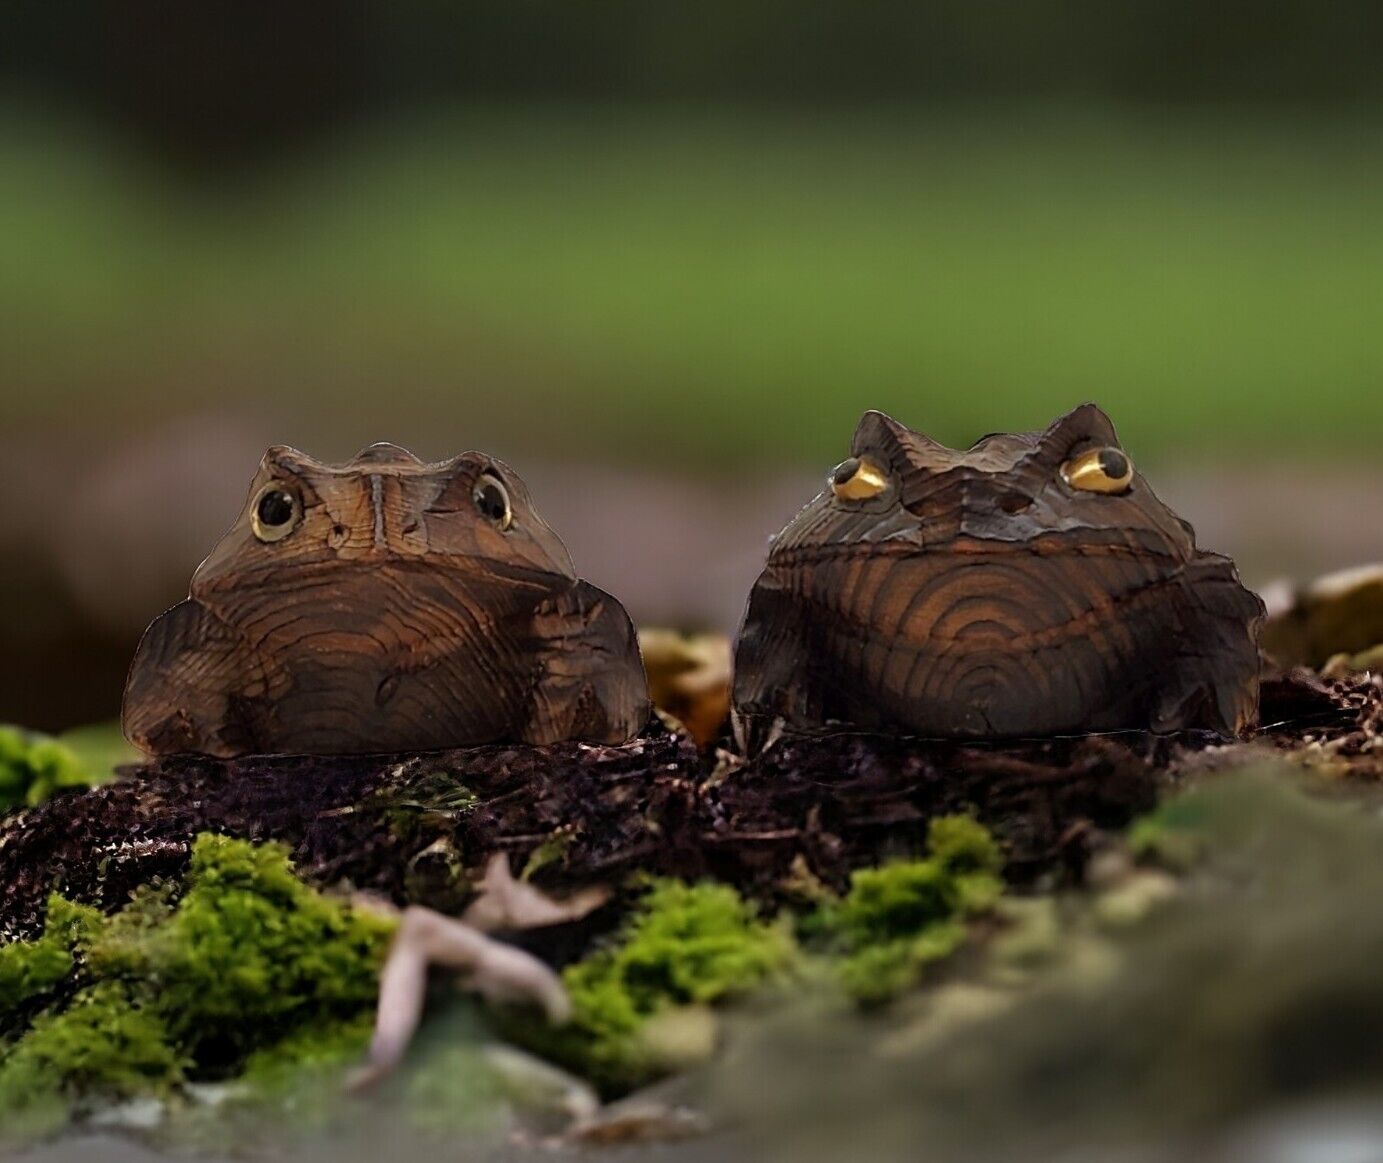 2 Vintage Hand Carved Cryptomeria Japanese Sugi Cedar Wood Toads Frogs